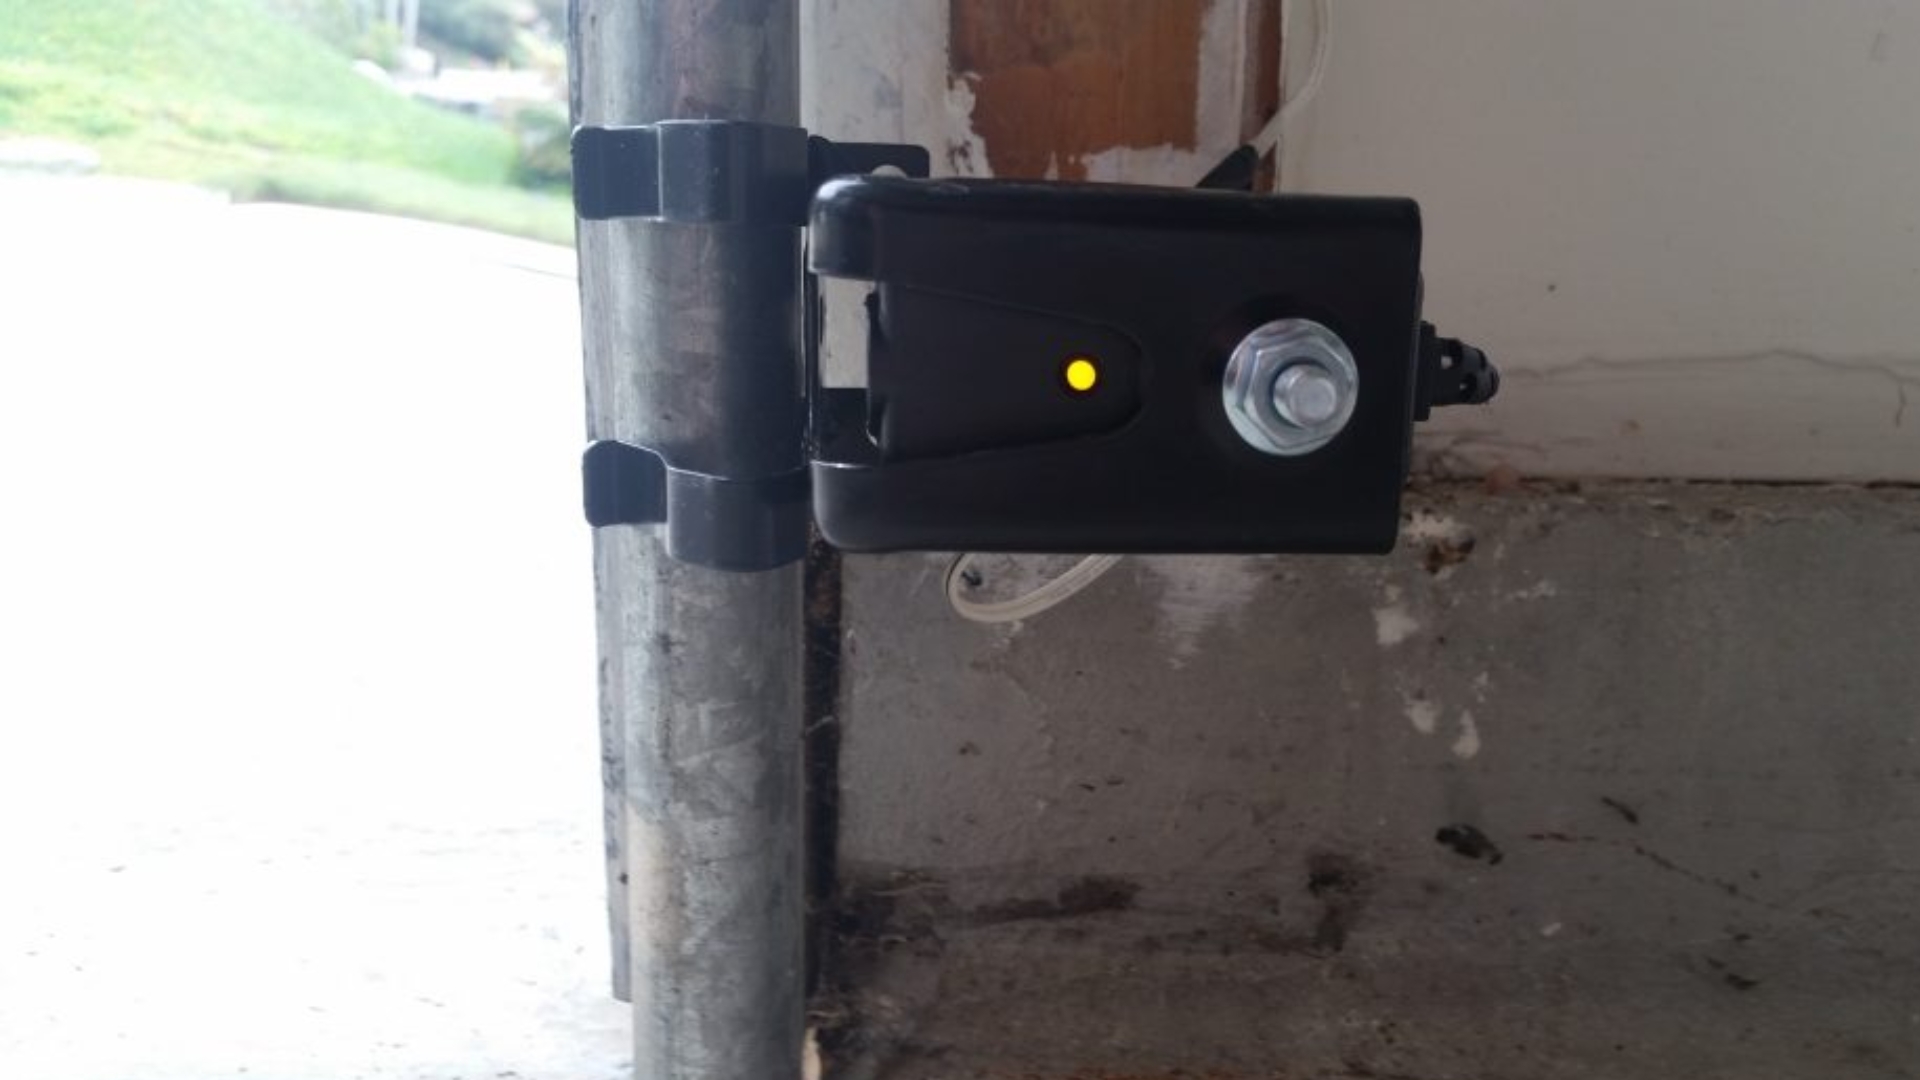 A working garage door safety sensor